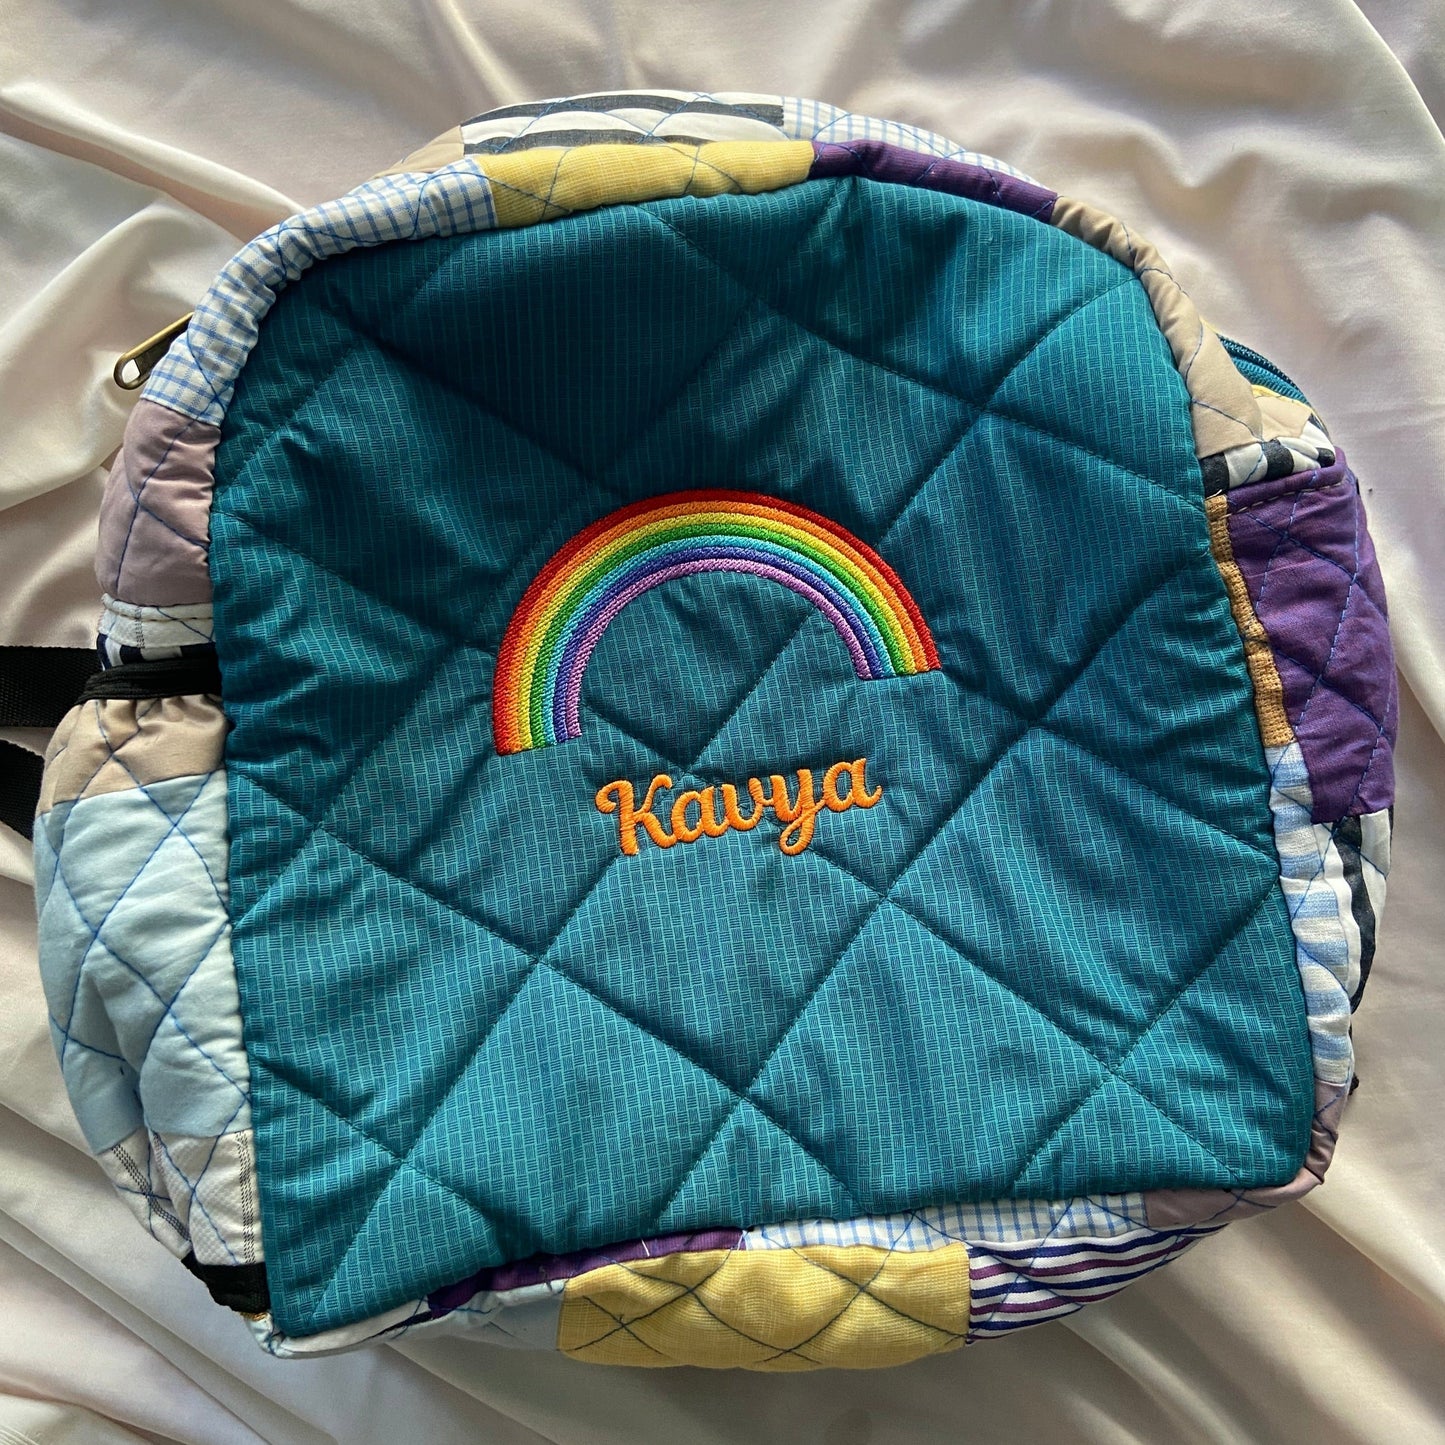 Customised Backpack for Kids - Roaring Lion